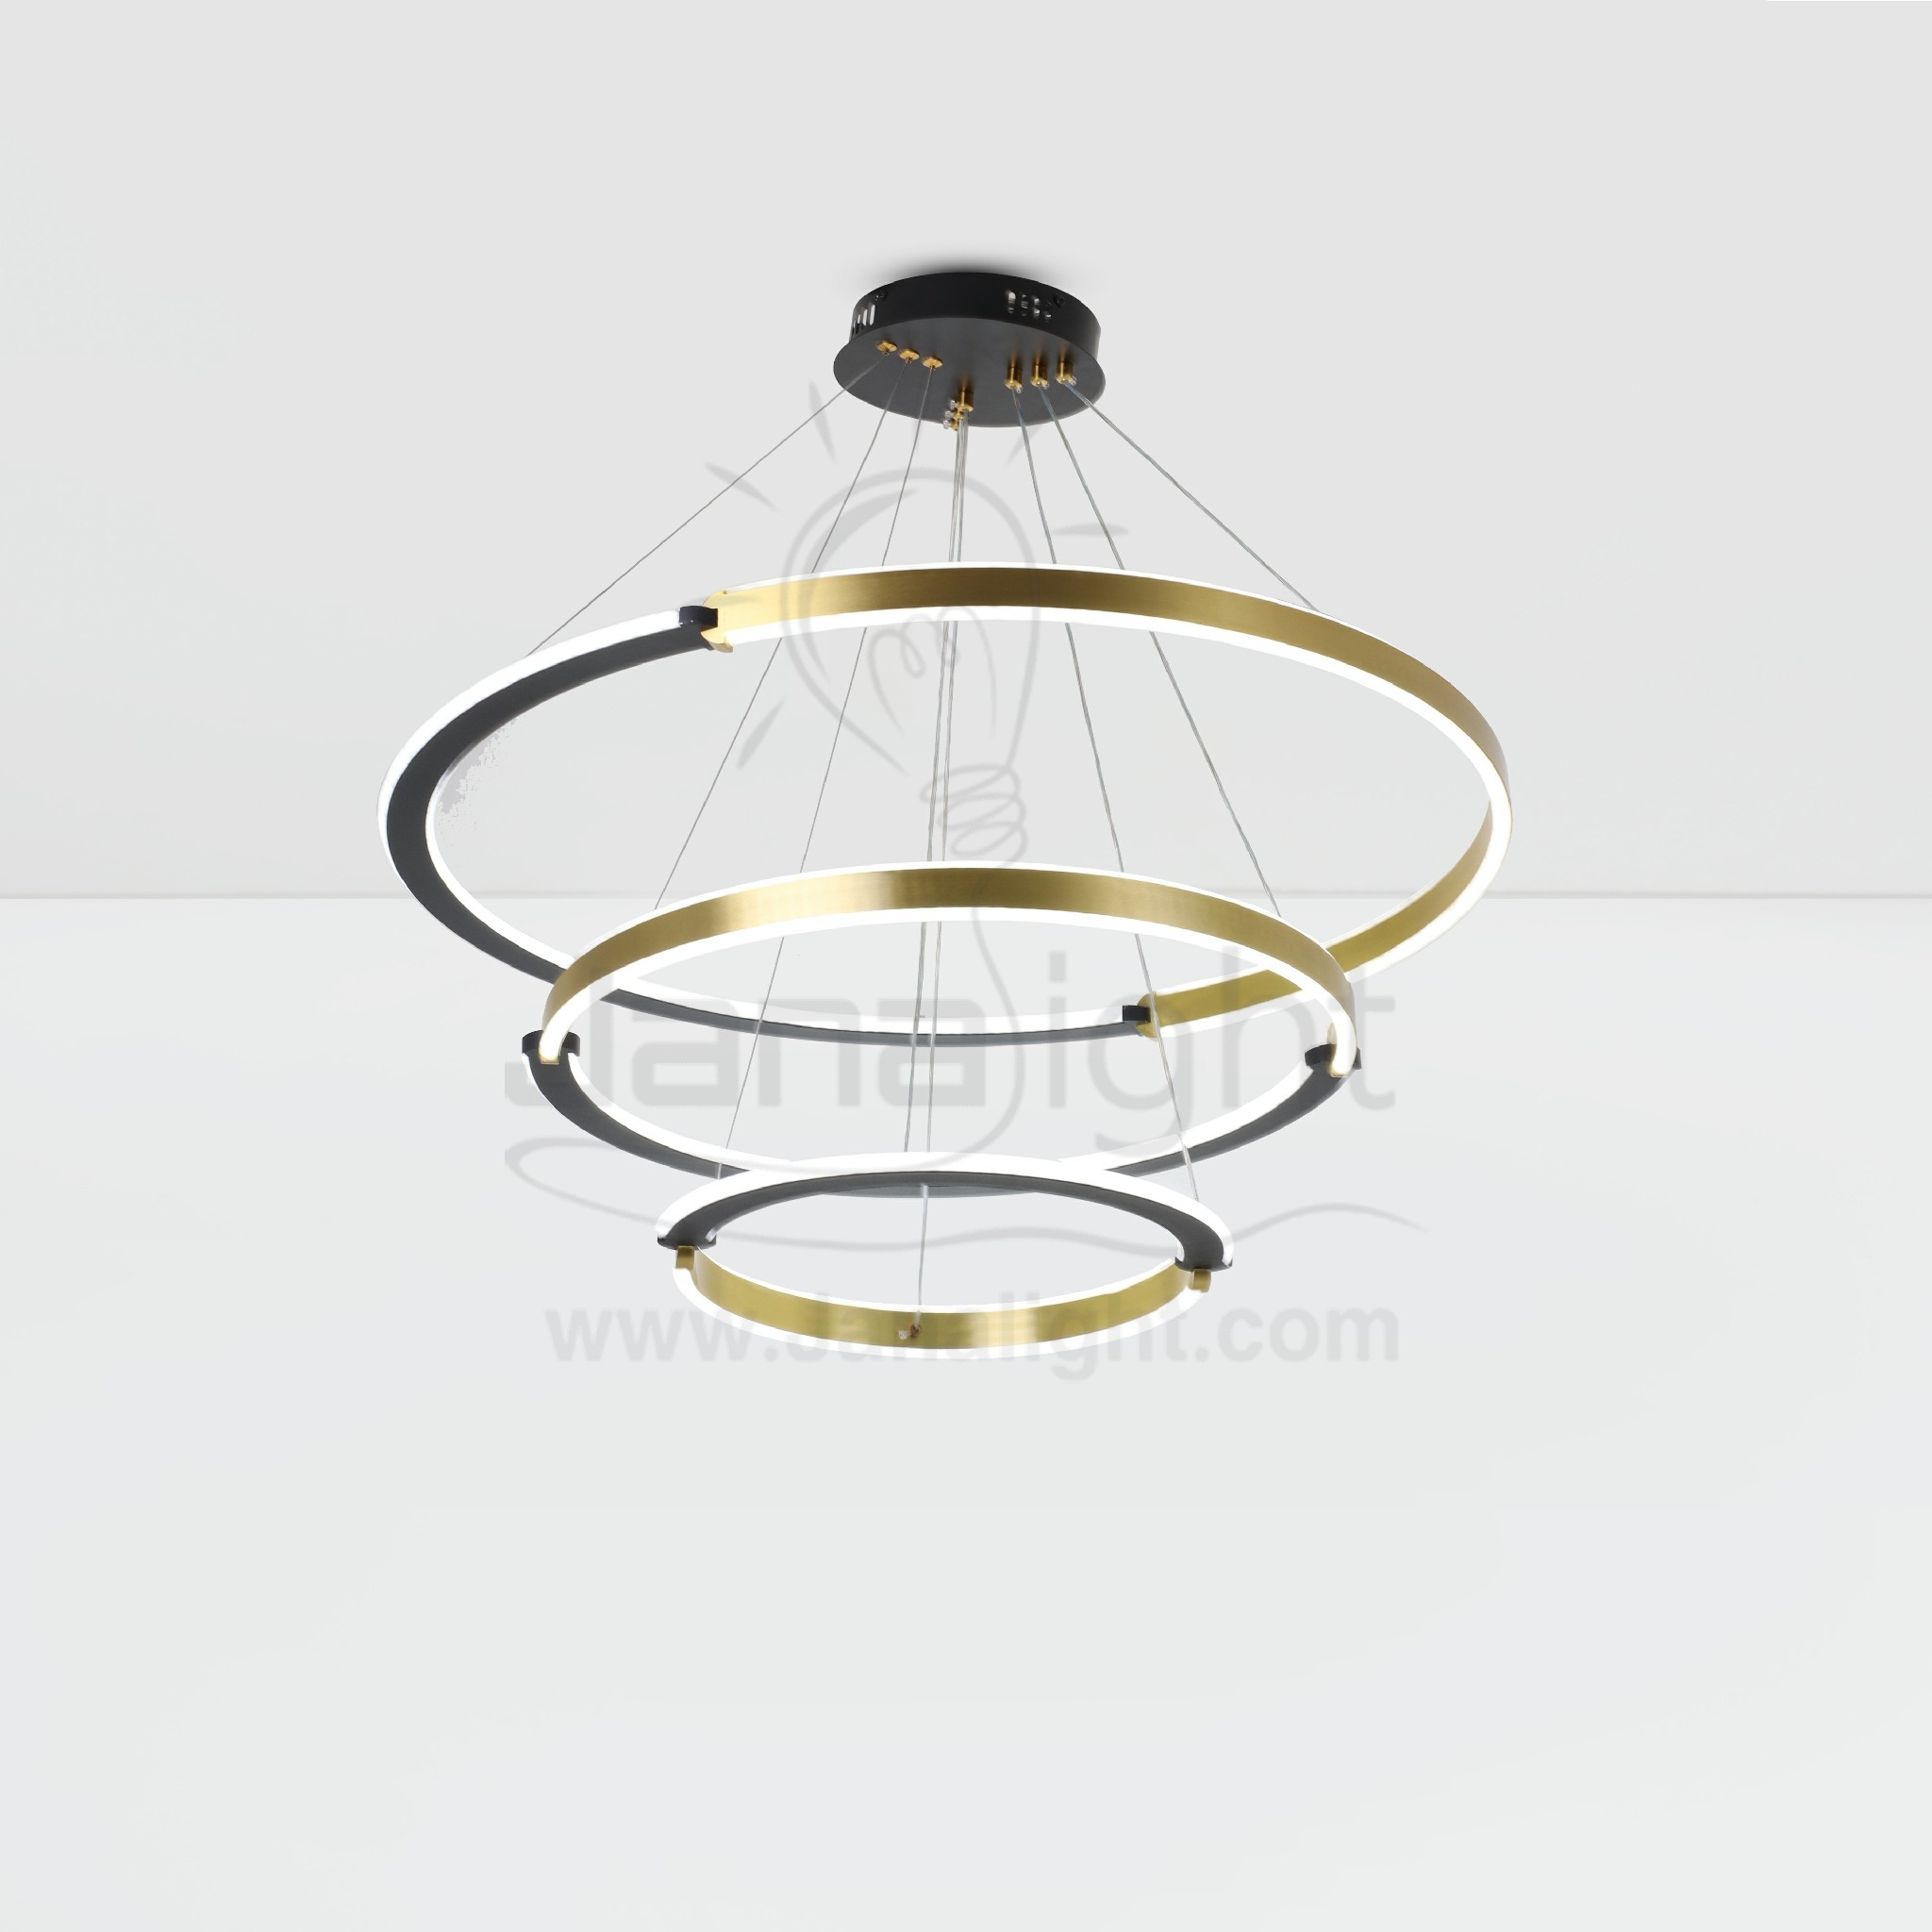 دلاية ليد ثلاثة دوائر اطار مدمج لونين Modern luminaire hanglamp ceiling pendant light led chandeliers black and gold acrylic 3 circular ring